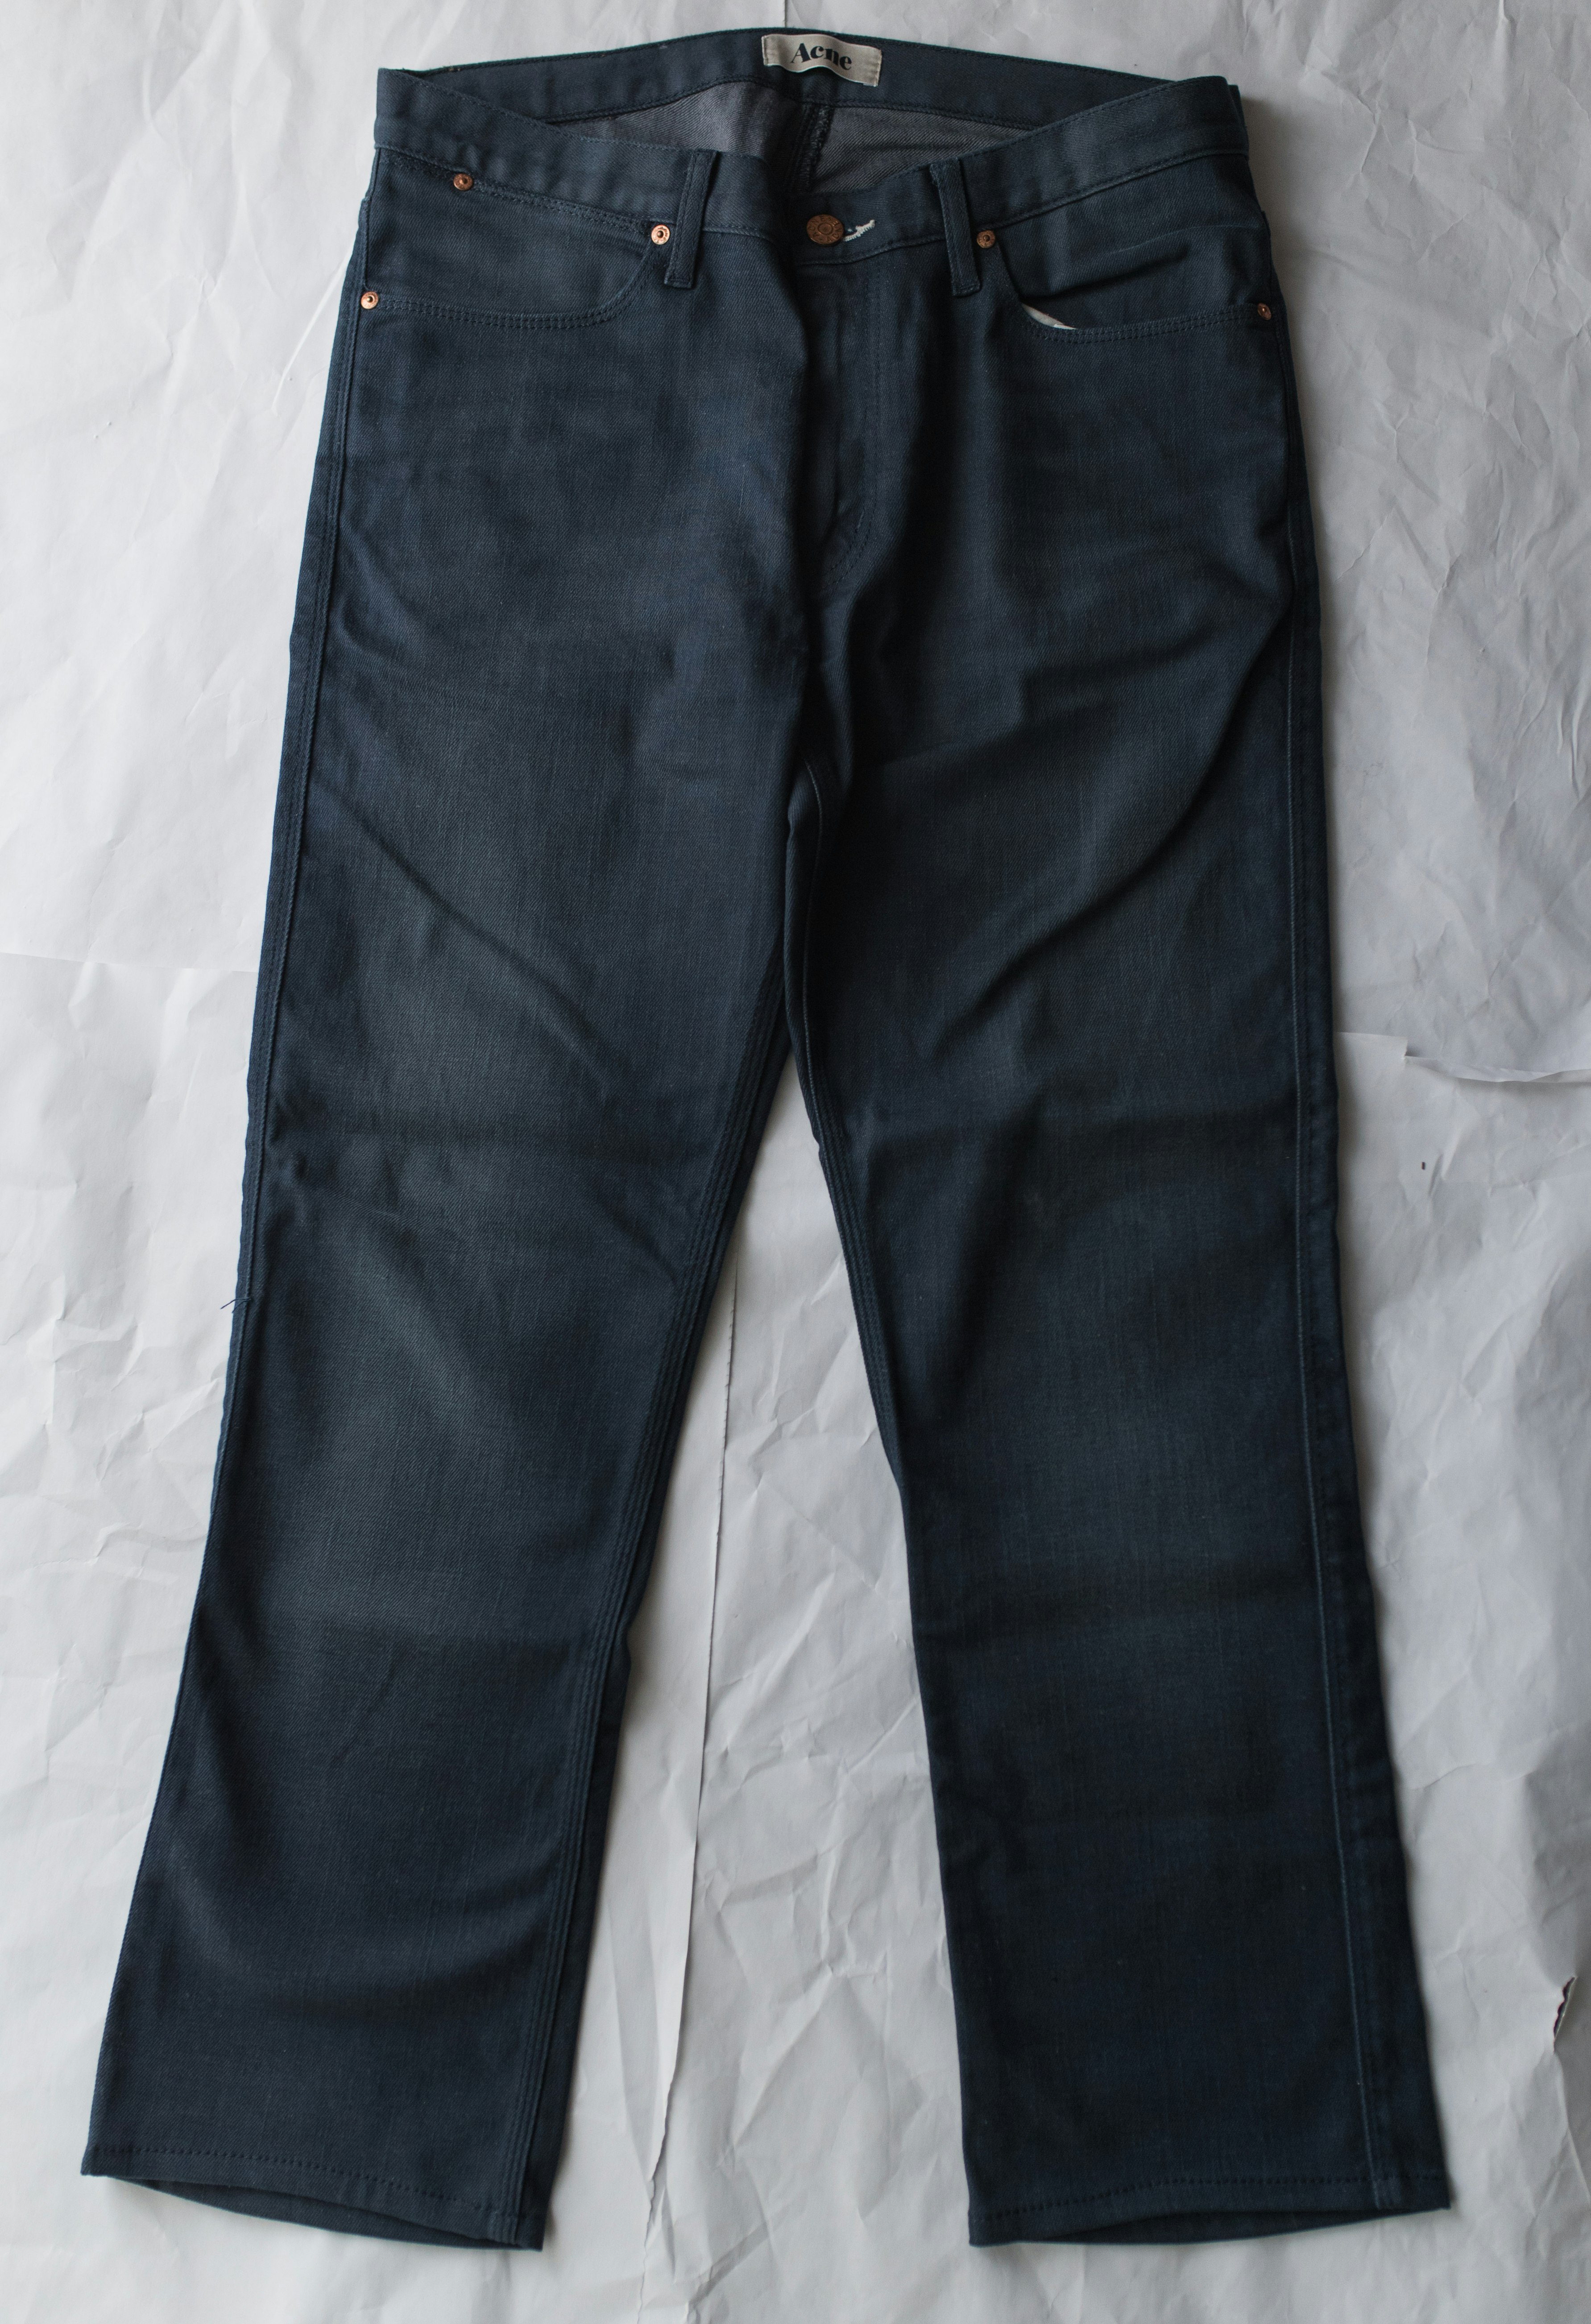 blue denim jeans on white textile